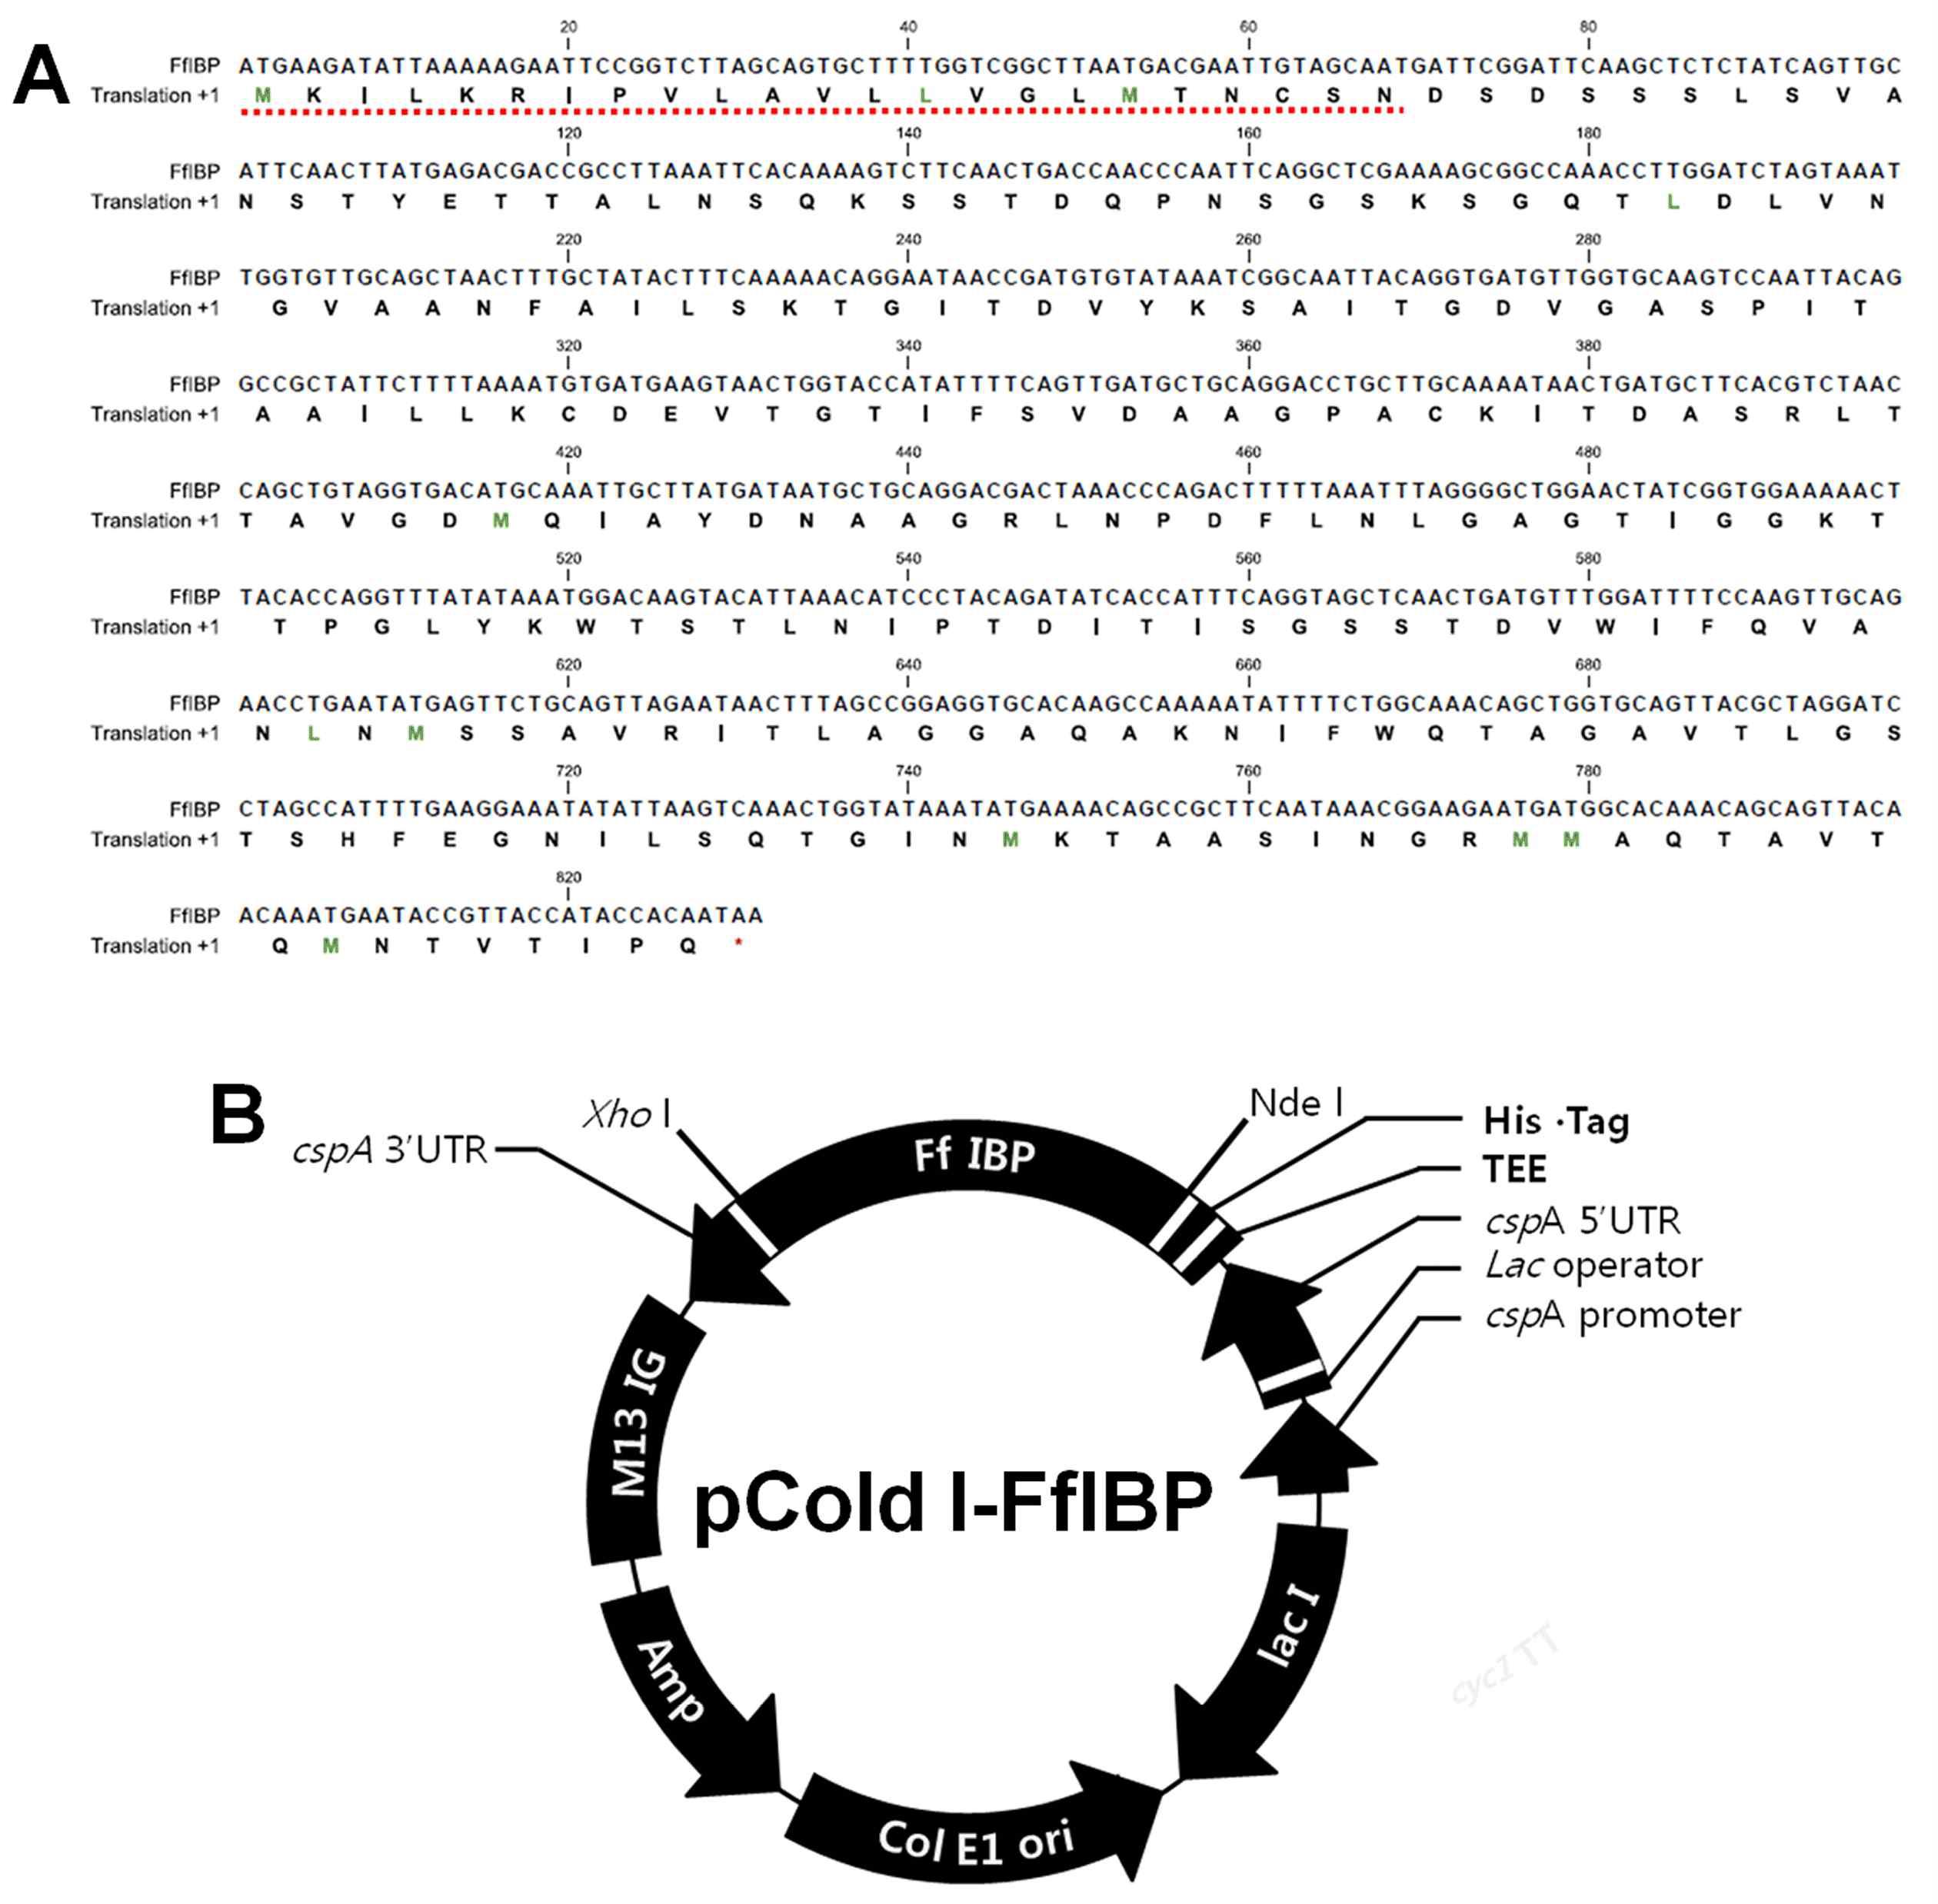 (A) 그림은 FfIBP 결빙방지단백질의 DNA 와 단백질 서열 (NCBI Reference Sequence: ZP_09896943.1)을 나타냄.